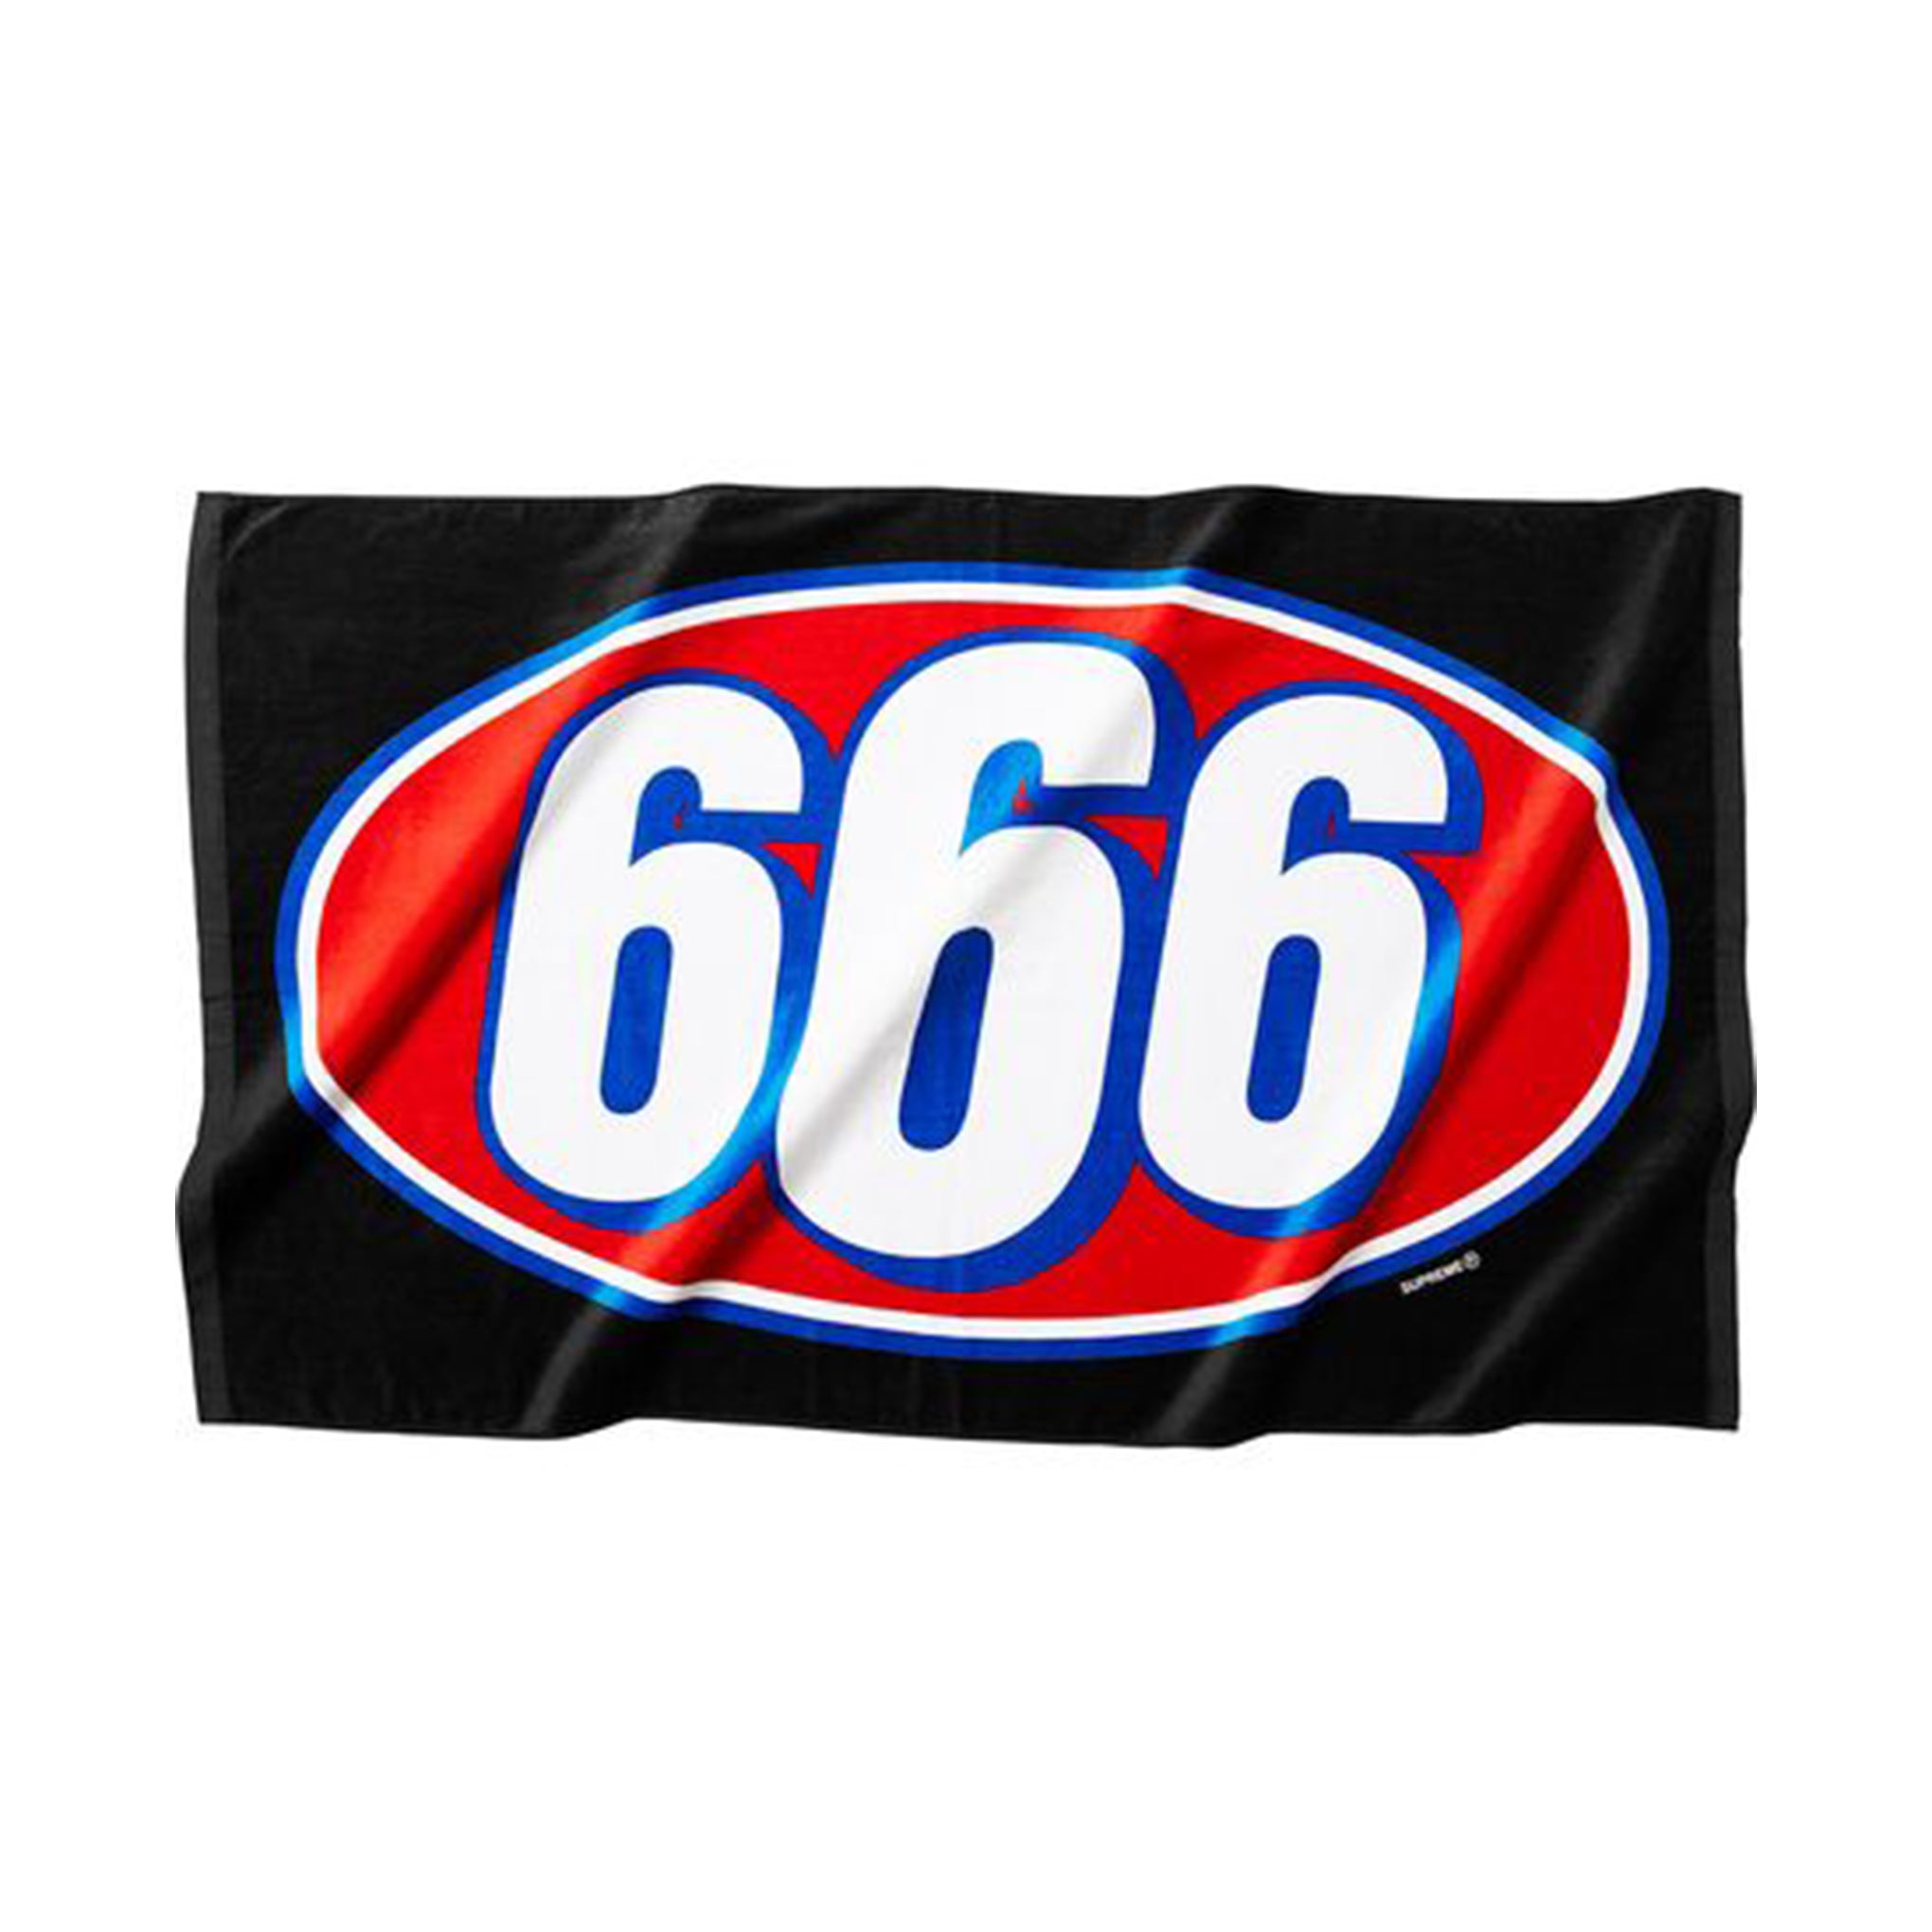 SUPREME 666 TOWEL BLACK